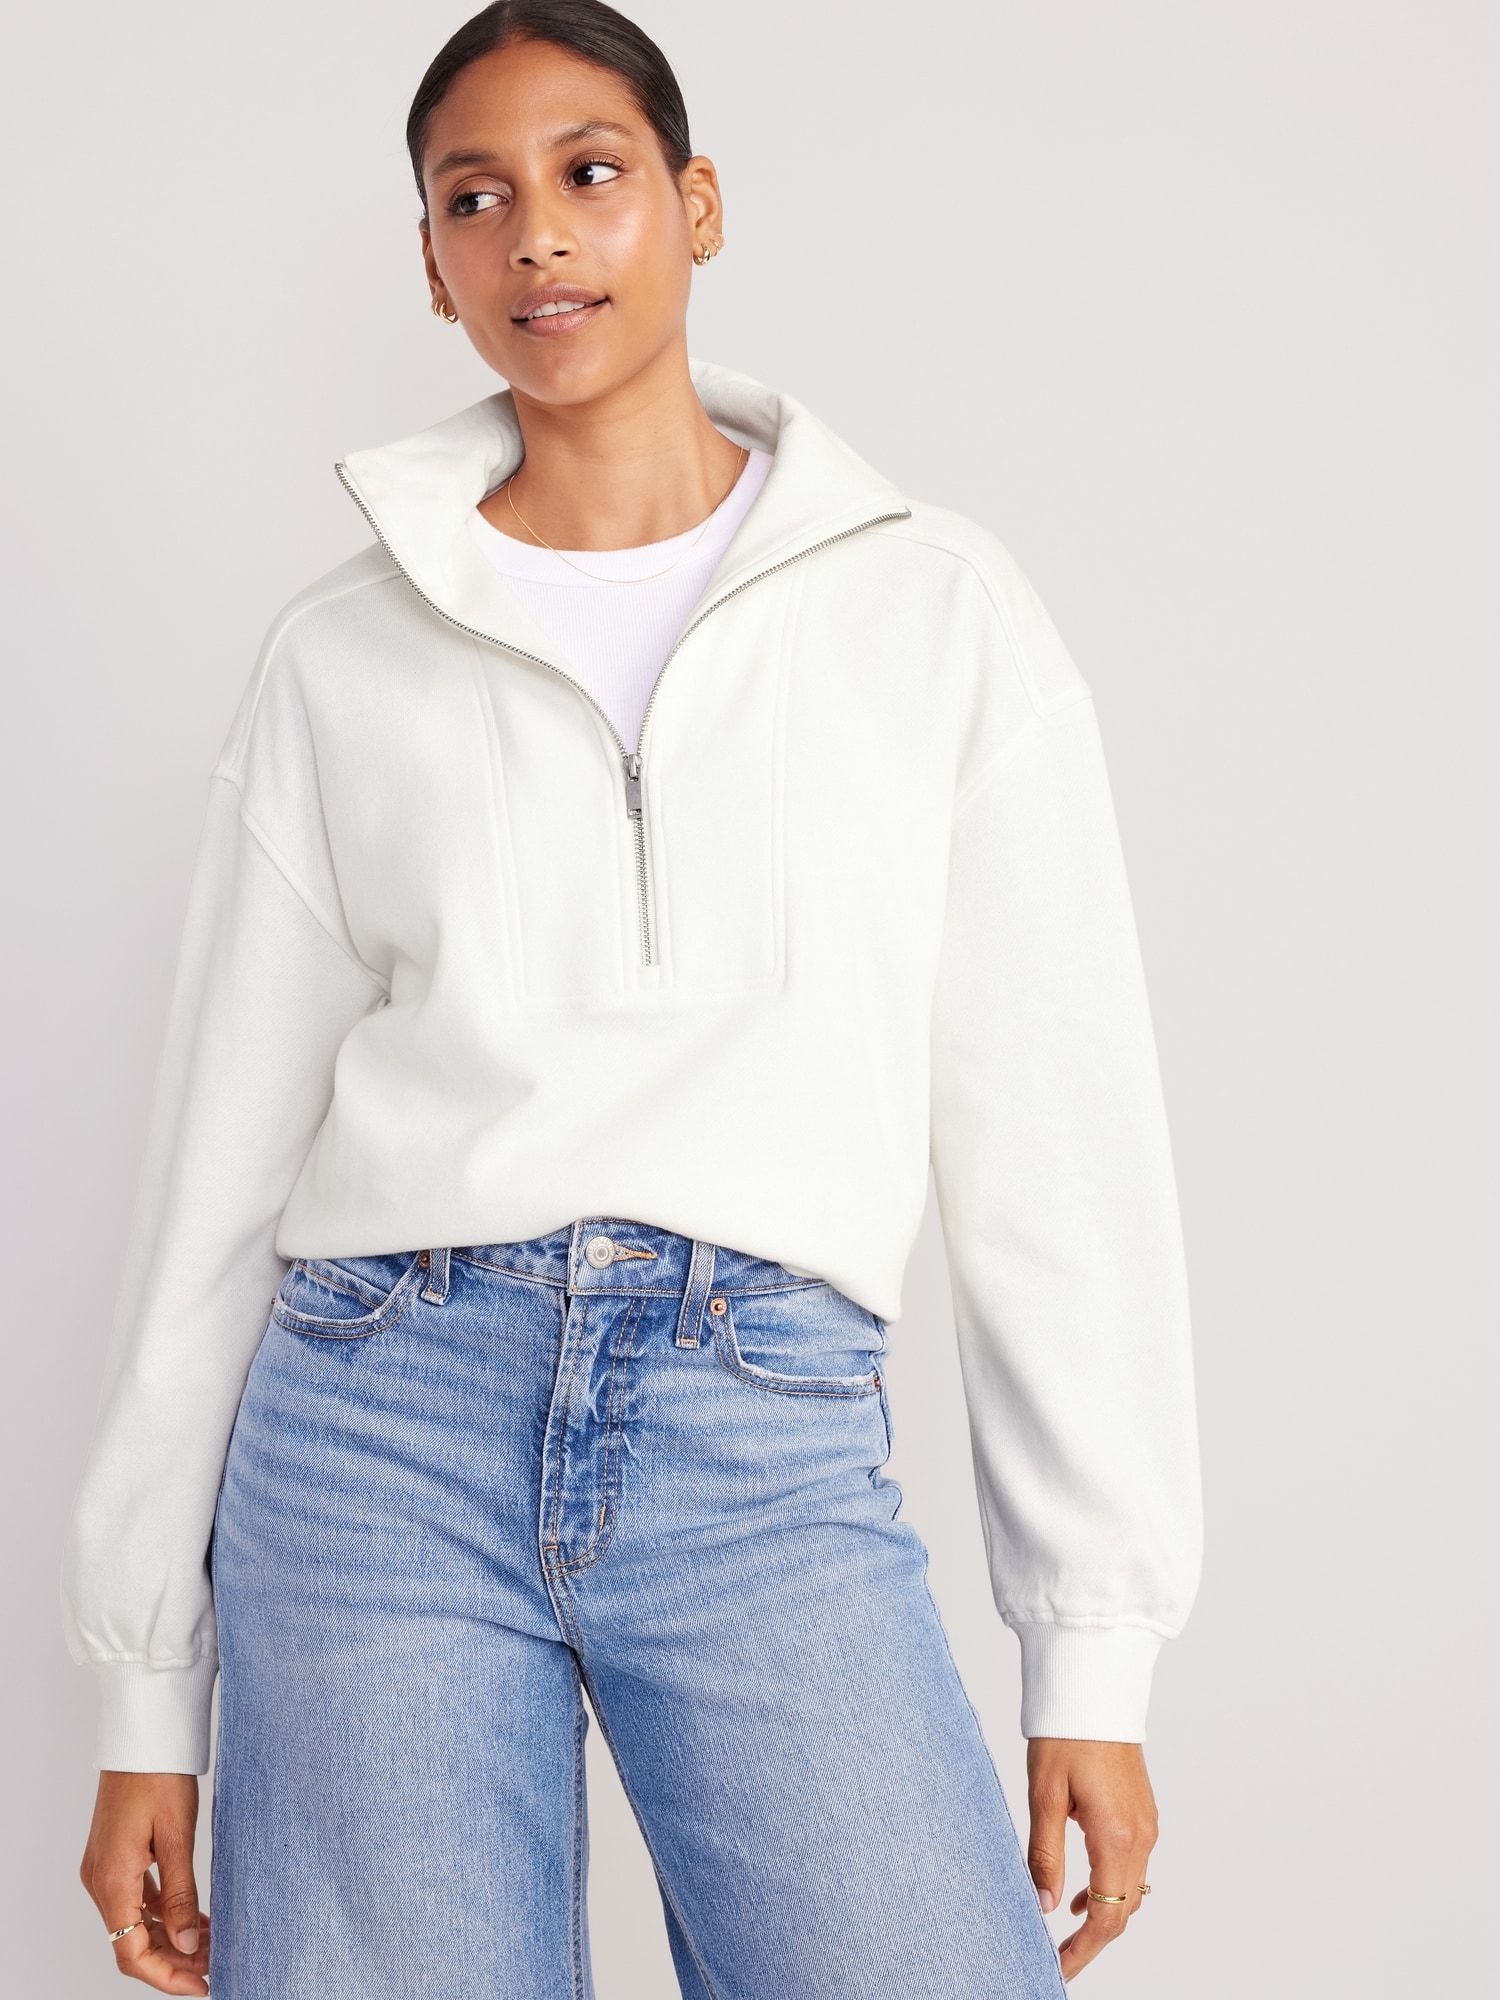 Oversized Half-Zip Pullover Tunic for Women